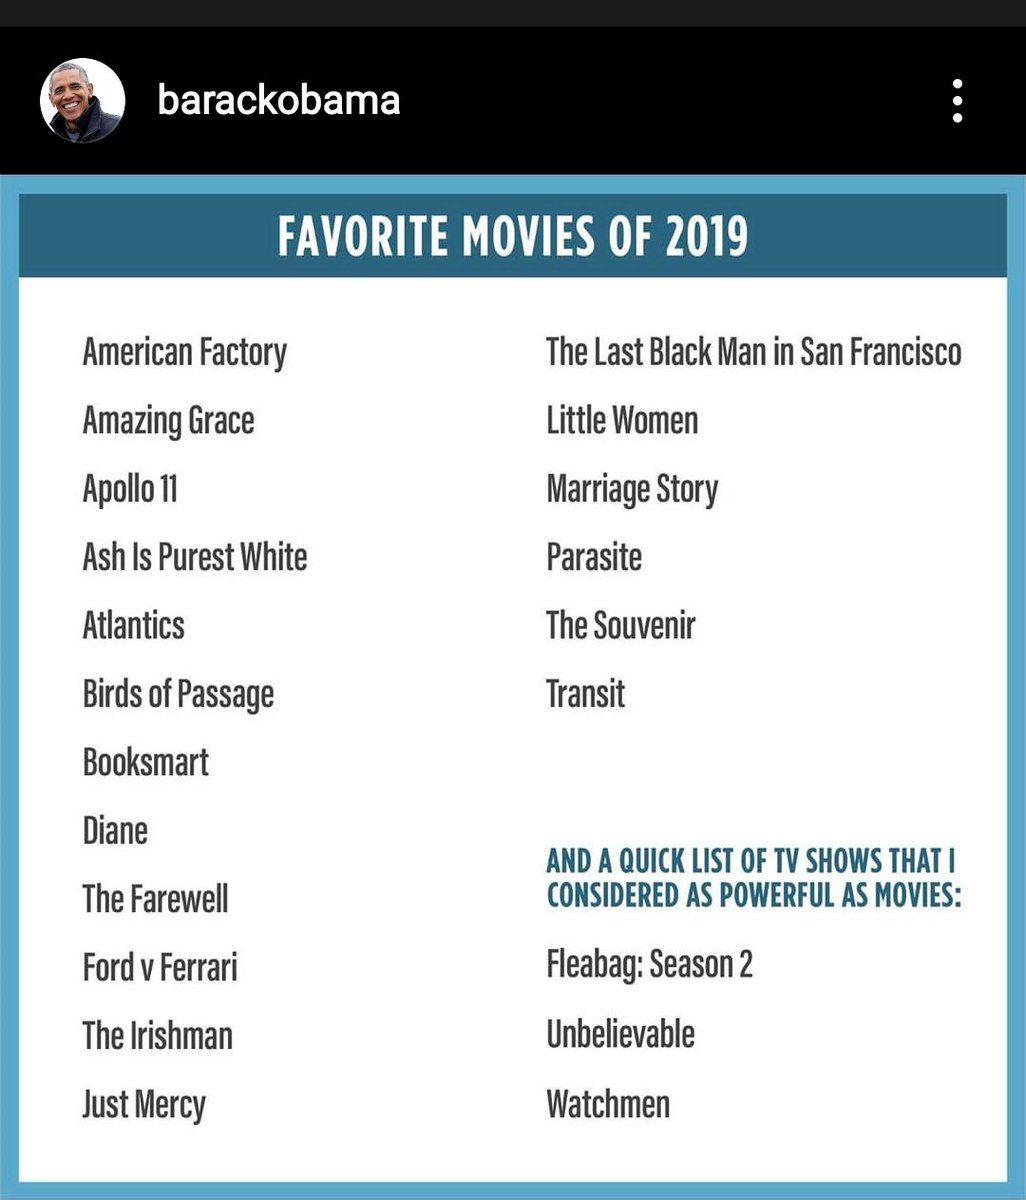 Atlantique est dans la liste des films favorits de President Barack Obama ! 💥🇸🇳 @Atlantique #MatiDiop #Atlantics #Kebetu